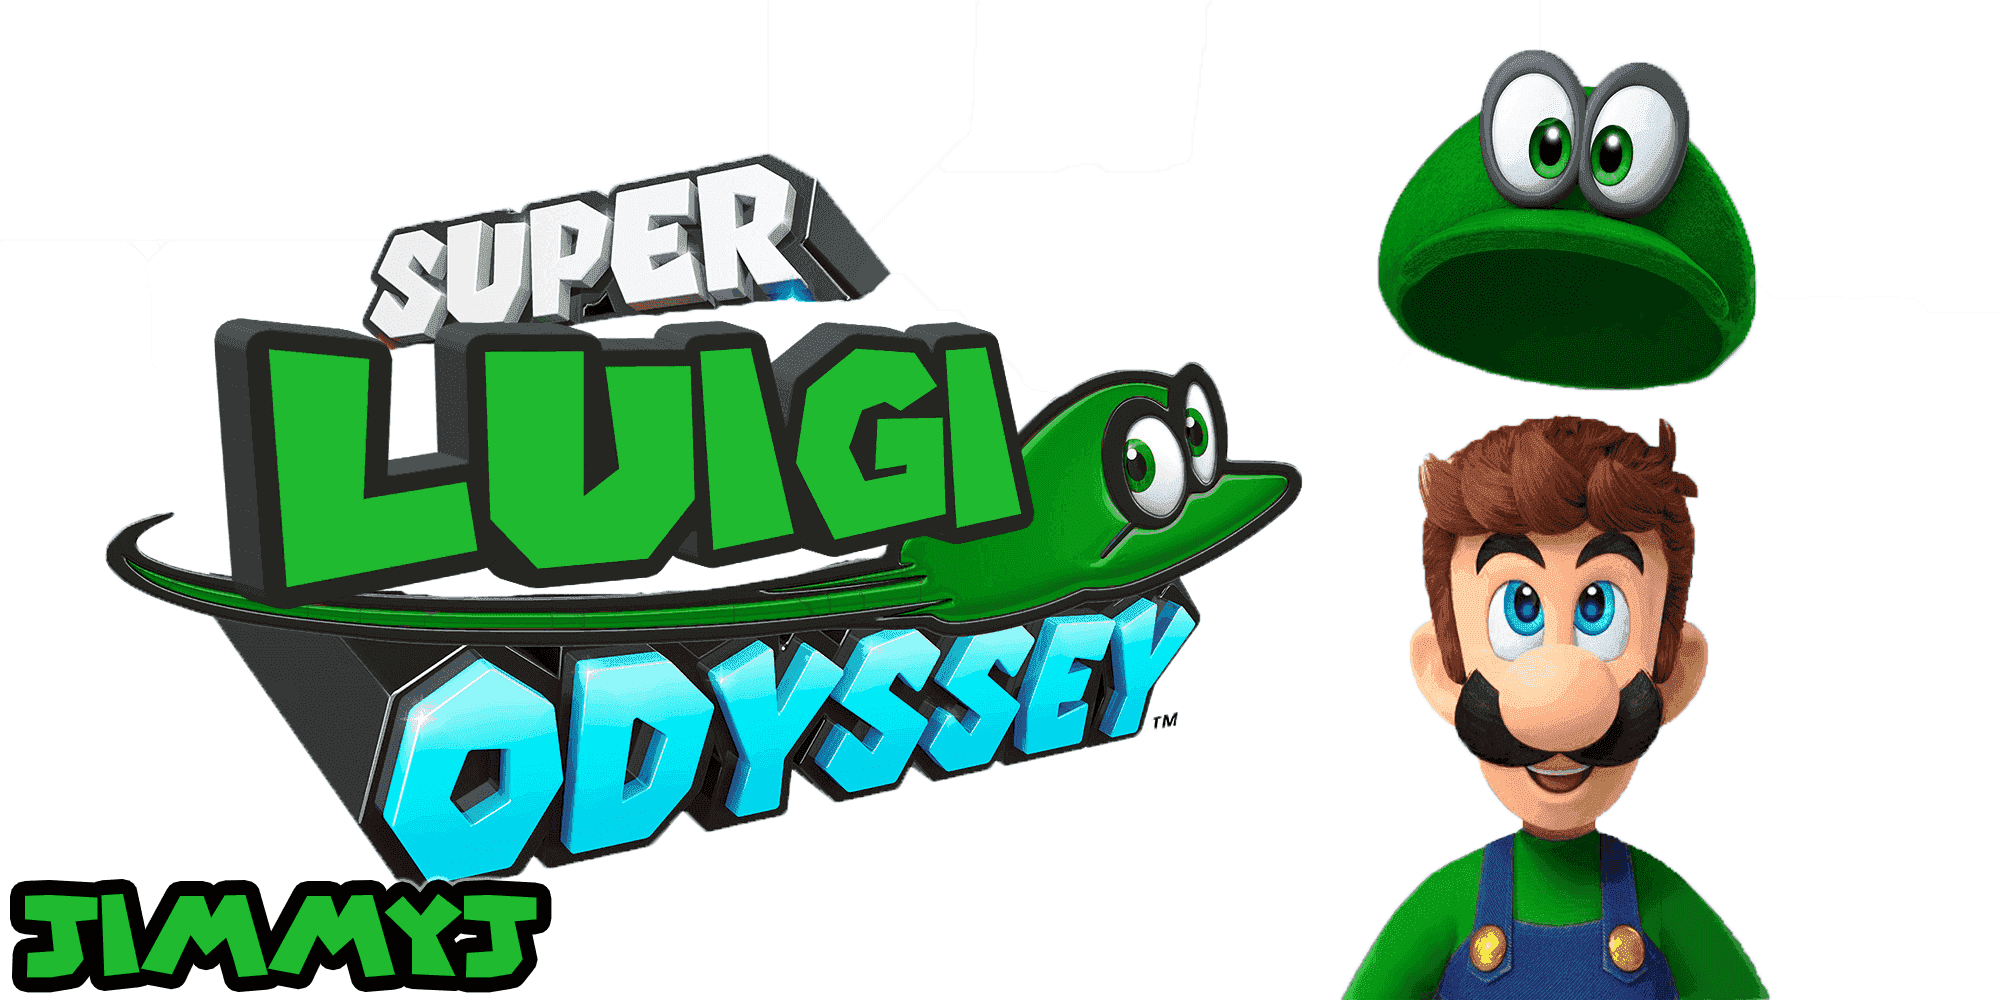 super luigi odyssey logo mock up | GBAtemp.net - The Independent Video Game  Community